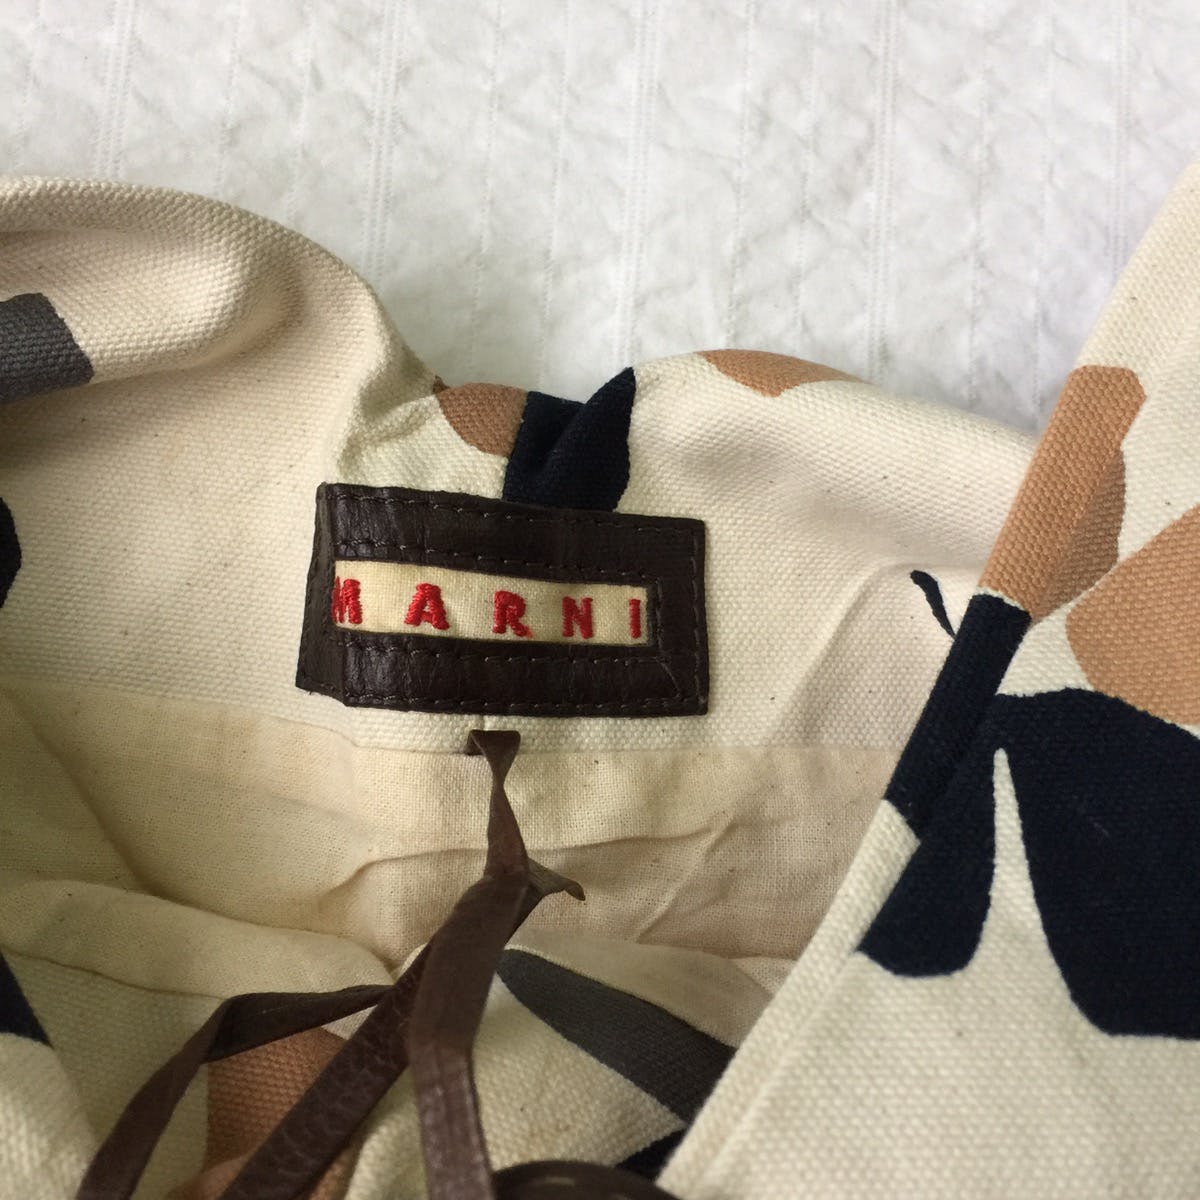 Marni bag made in Italy - 6